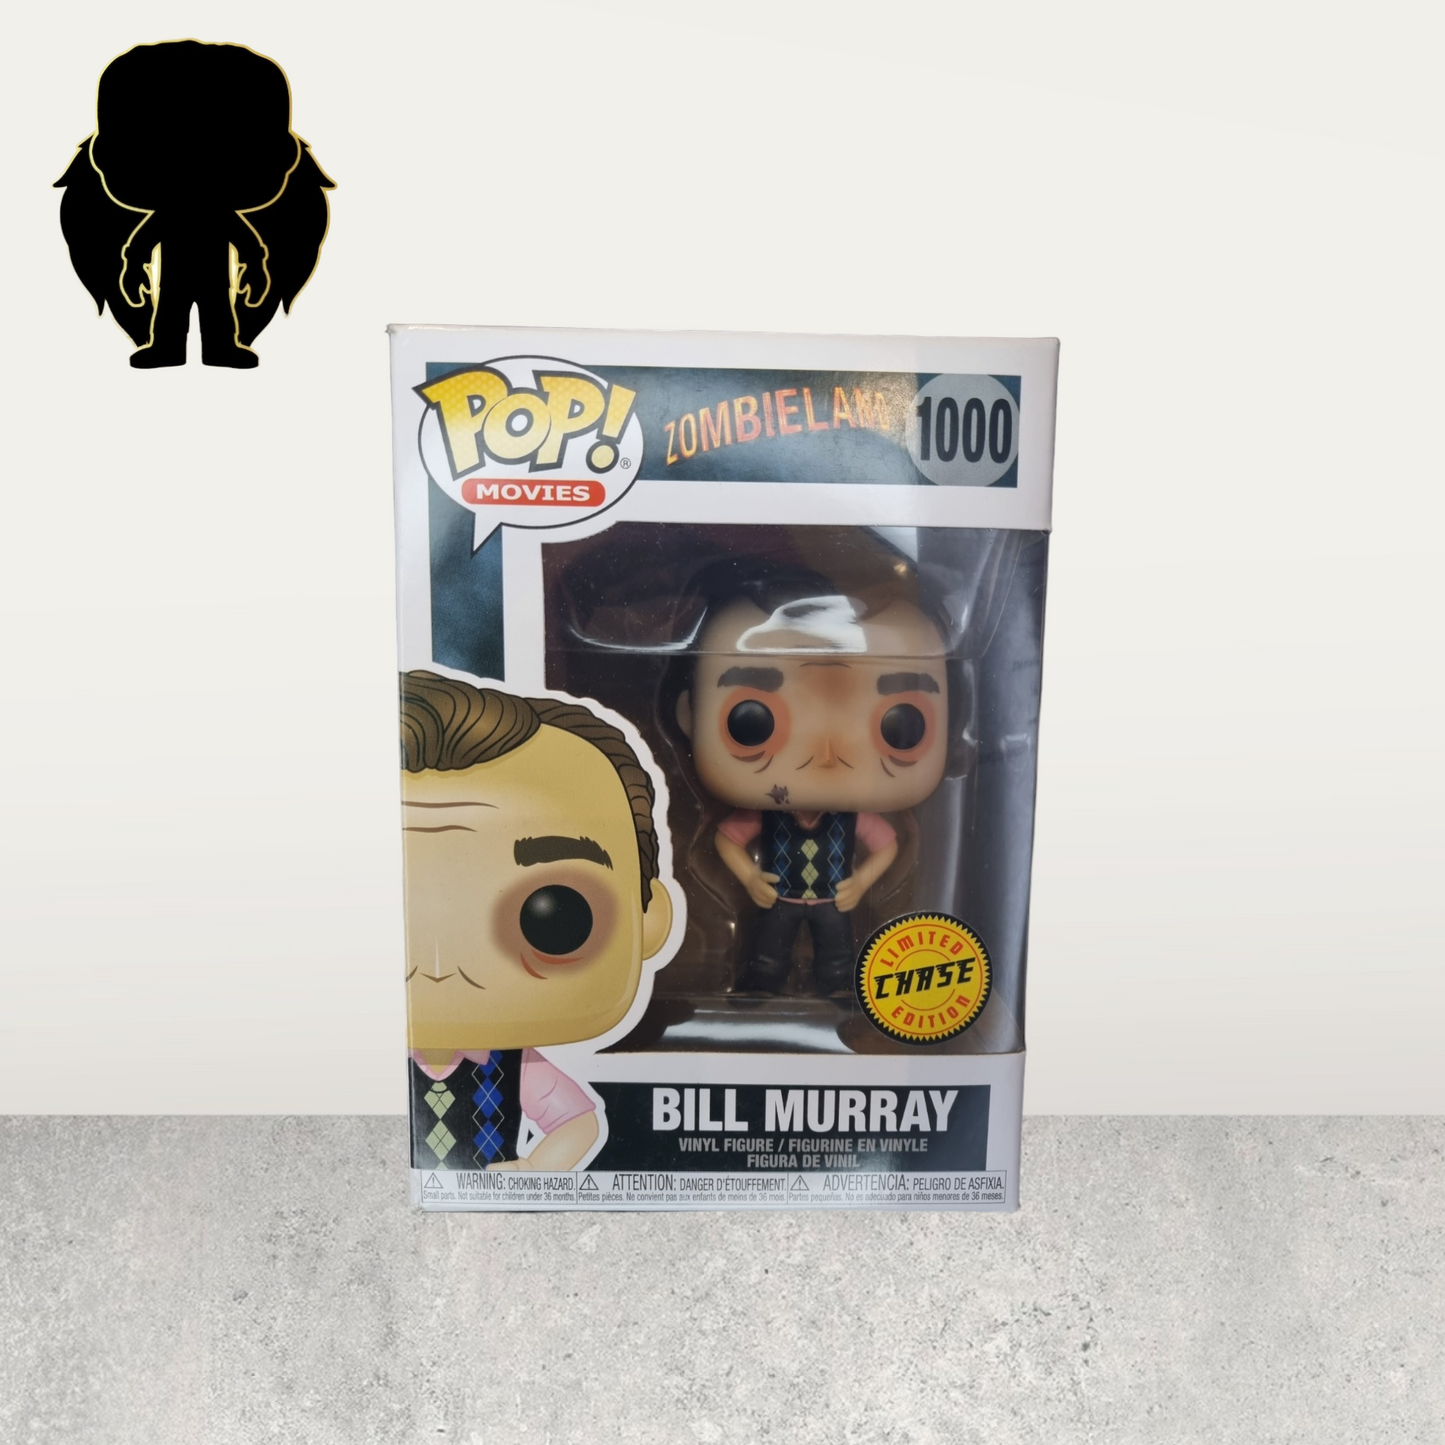 Zombieland - Bill Murray 1000 (Chase)